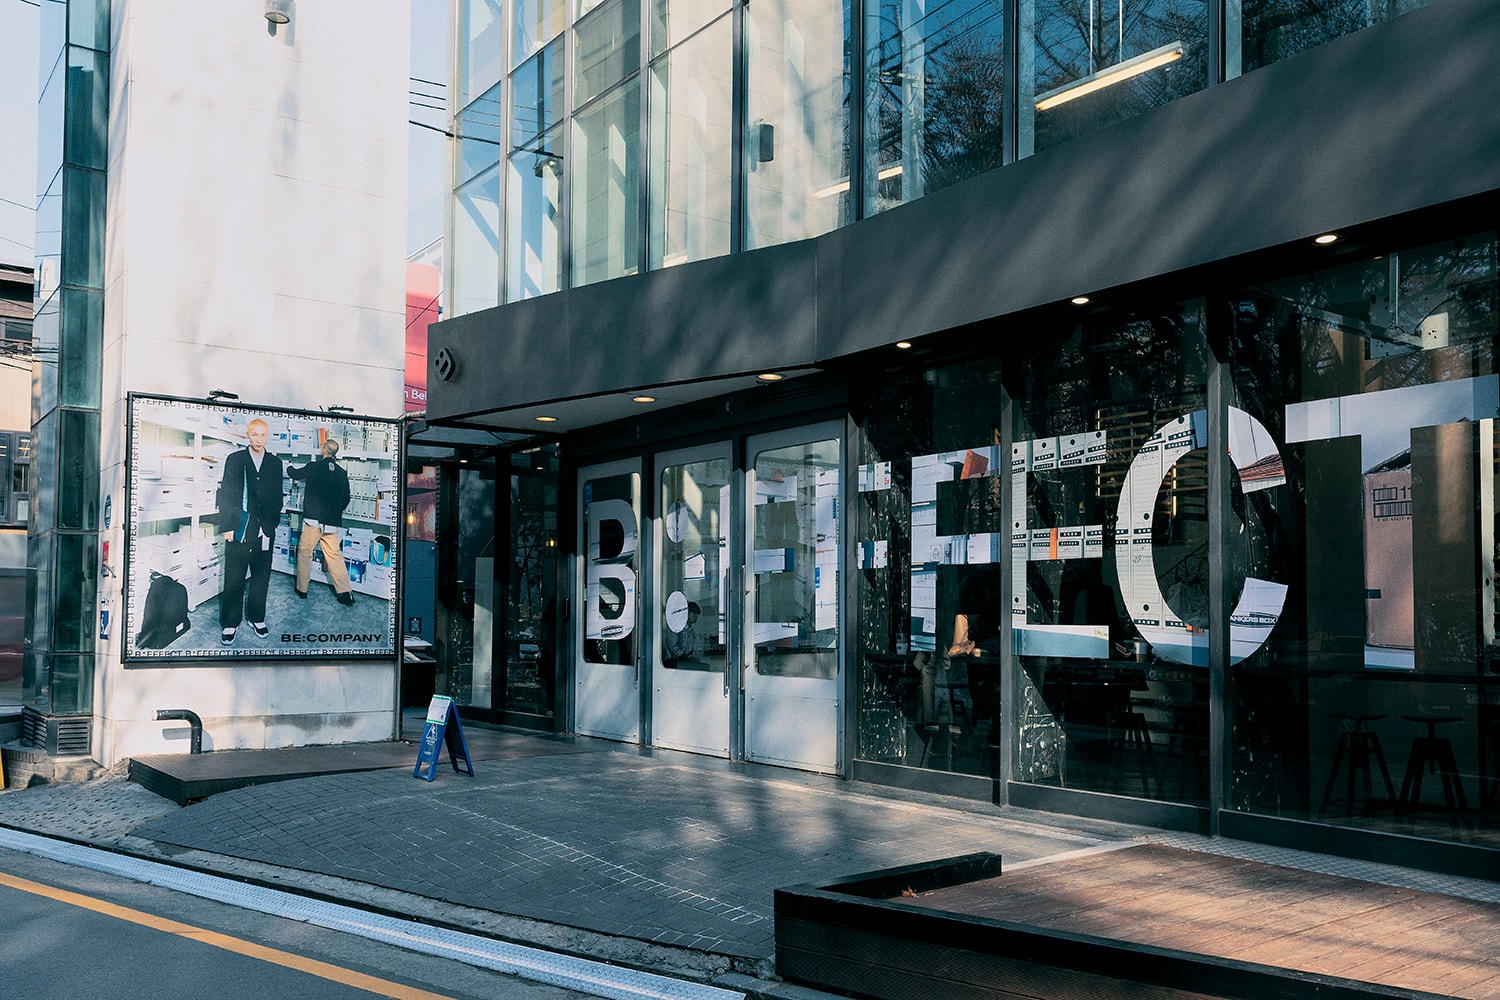 BEFFECT, 첫 번째 에피소드 BE:COMPANY 전시 및 브랜드 론칭 현장